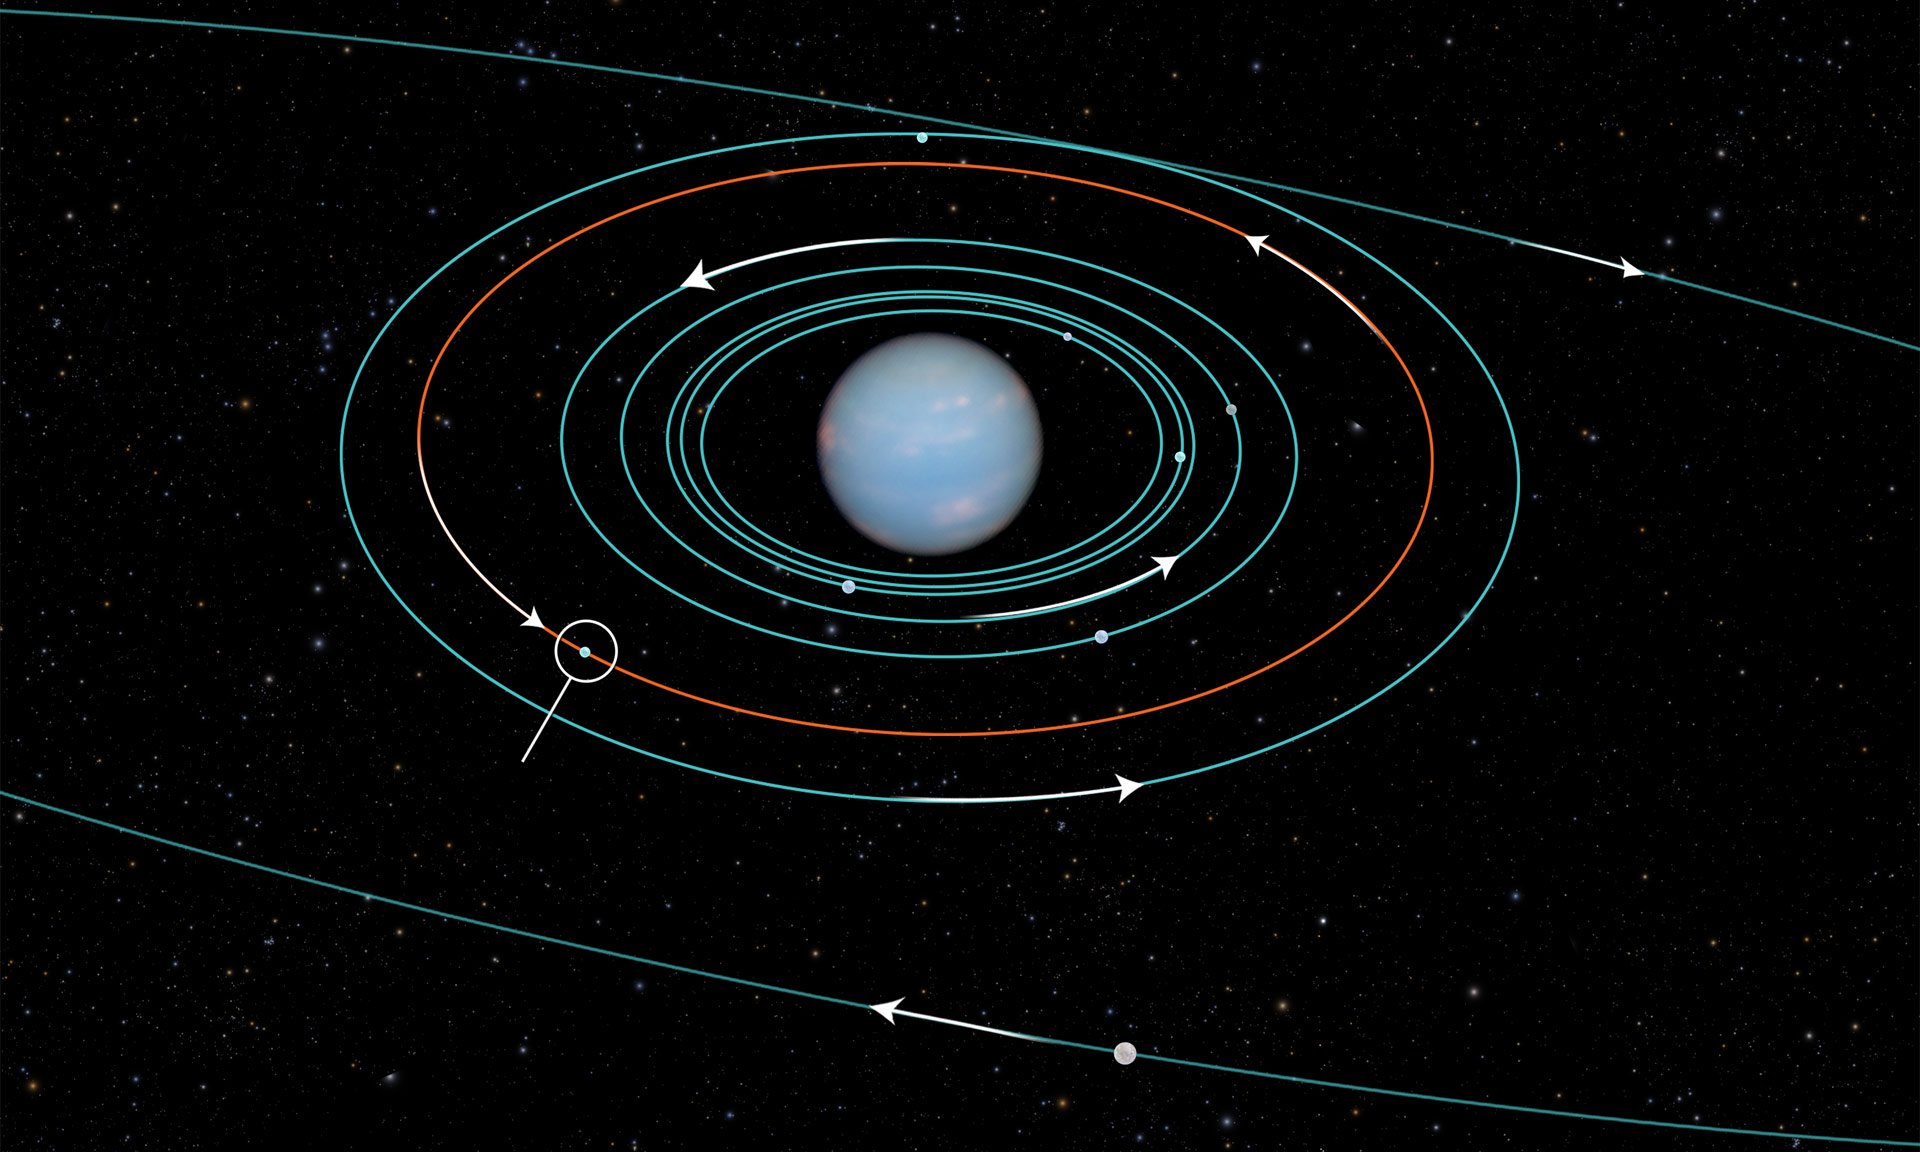 Hubble Data Reveals a New Neptune Moon